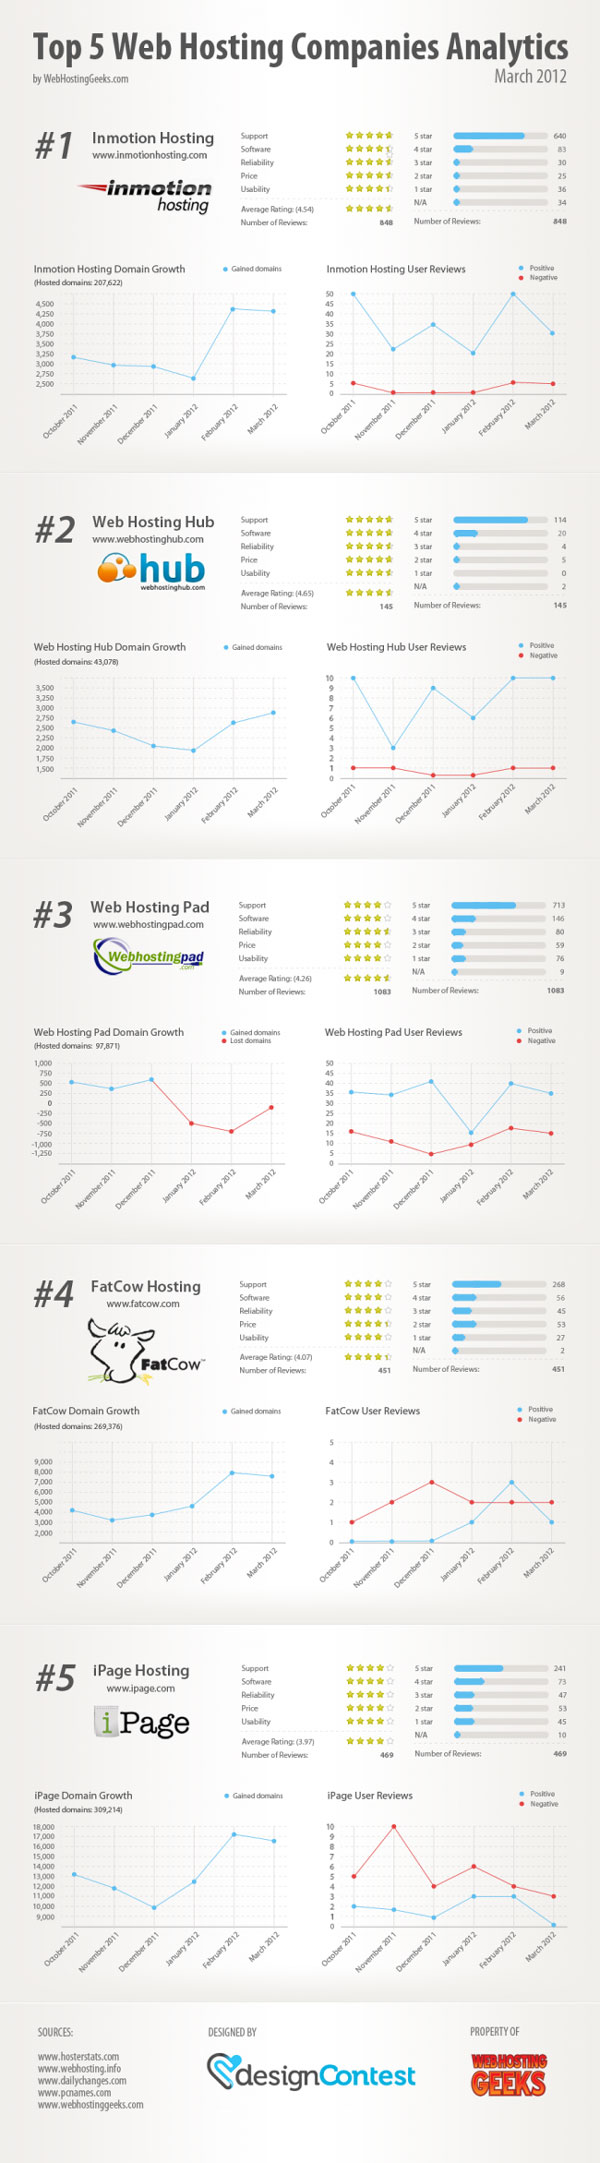 Top web hosting companies